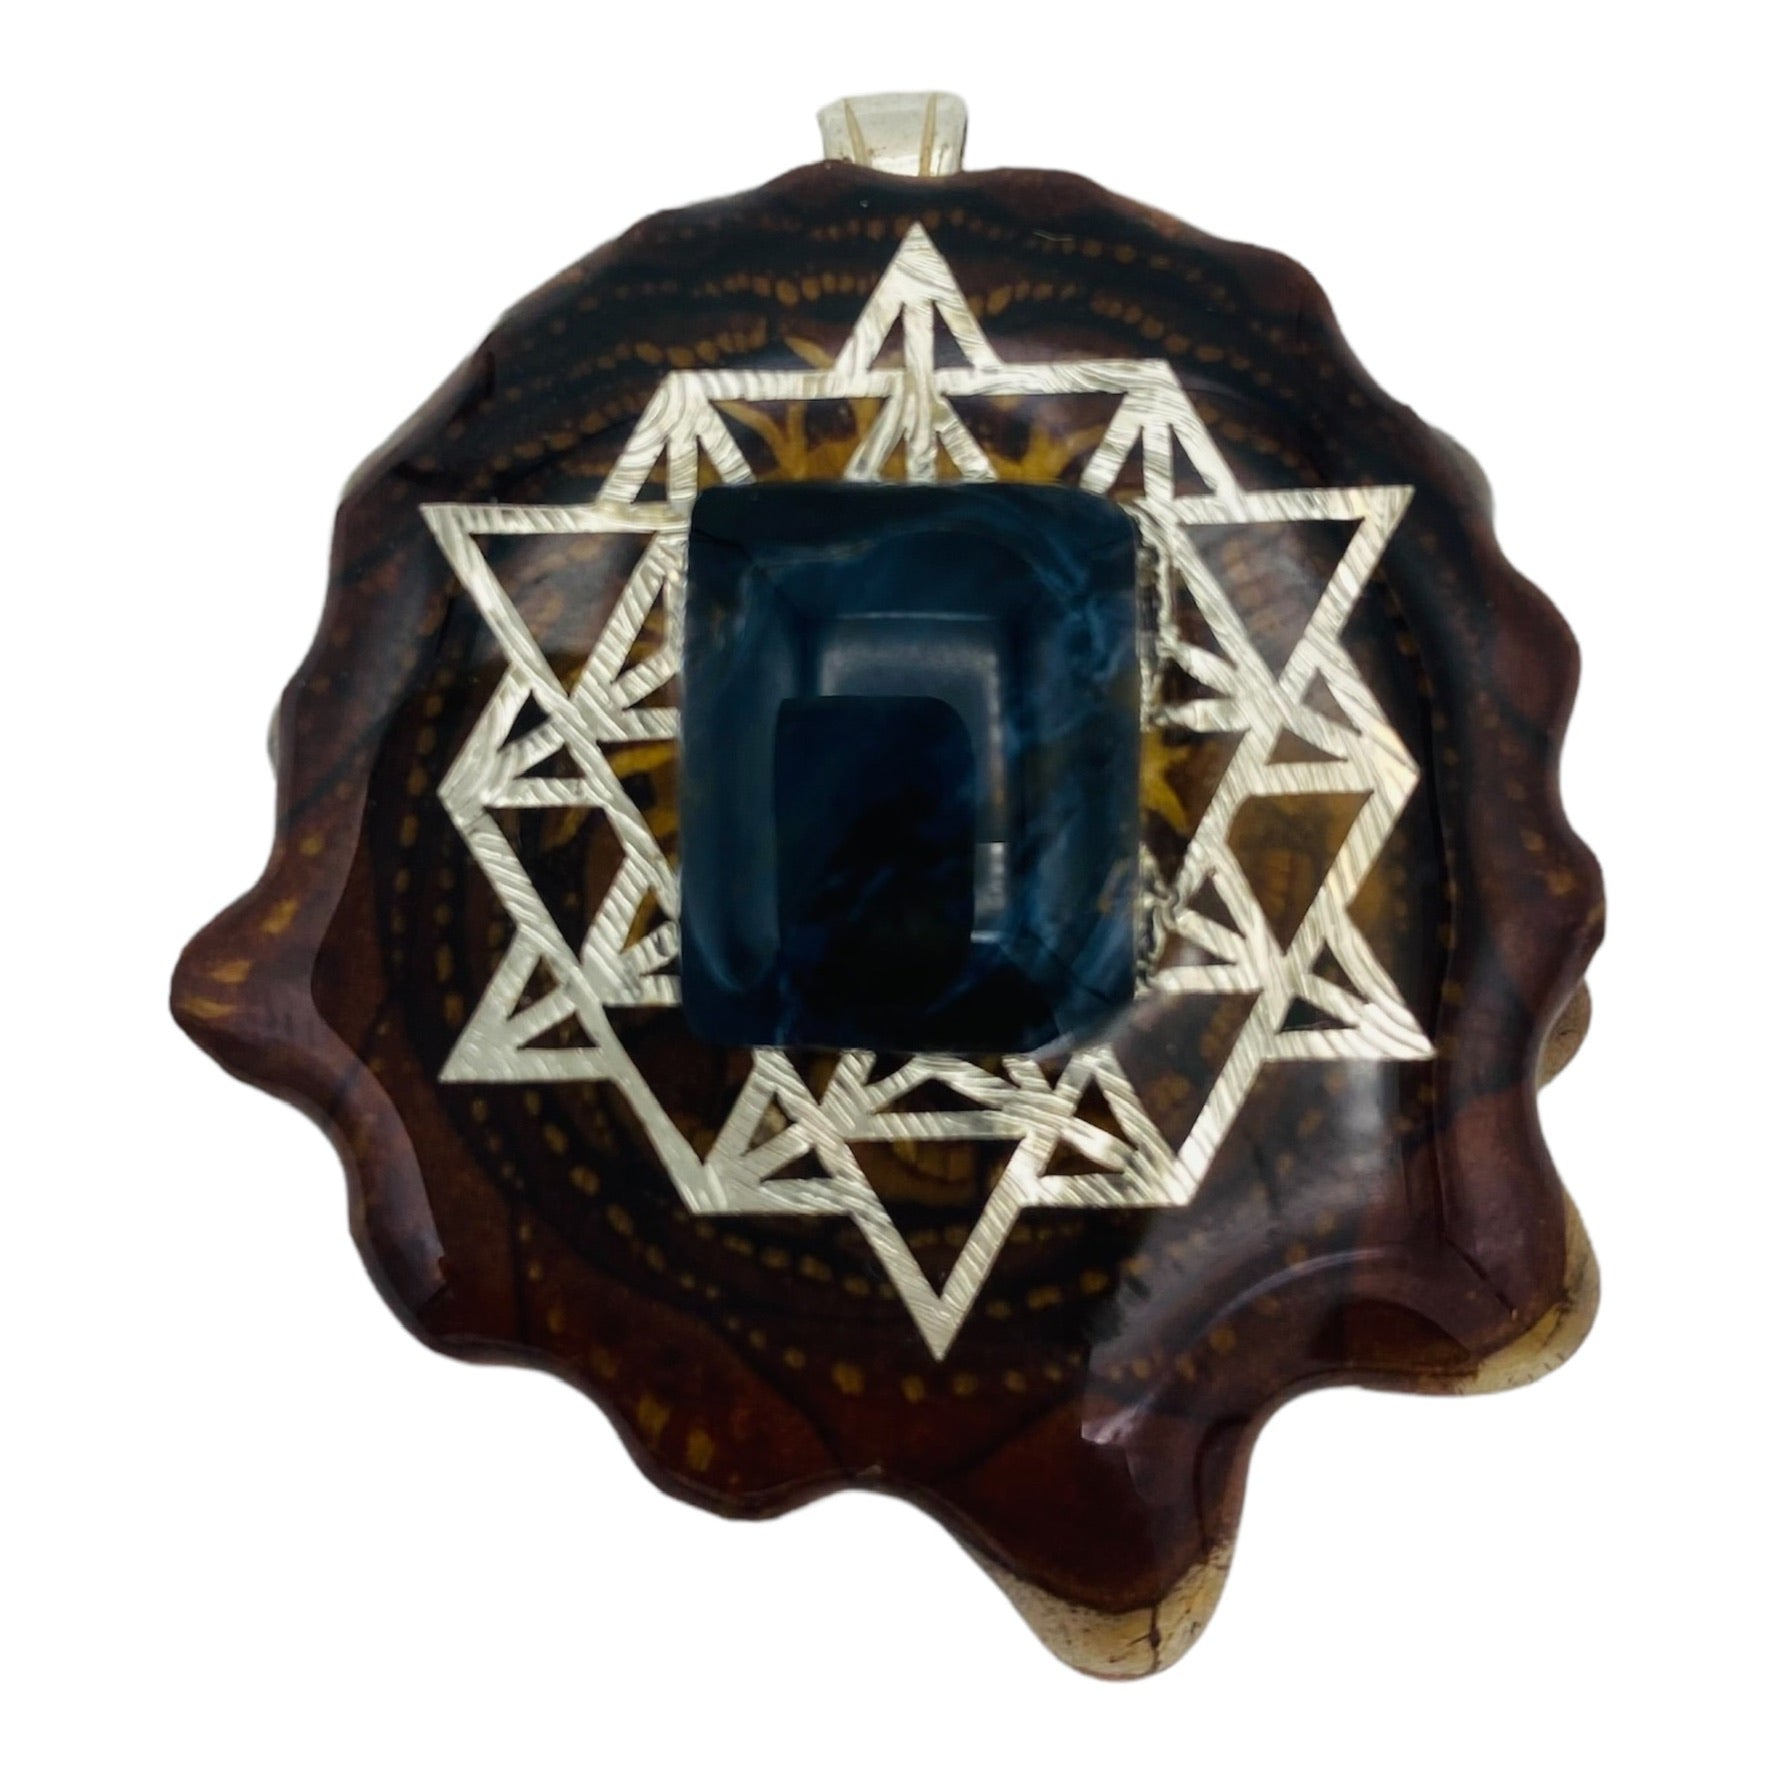 Third Eye Pinecones - Blue Pietersite With Silver Tetrahedron - Large